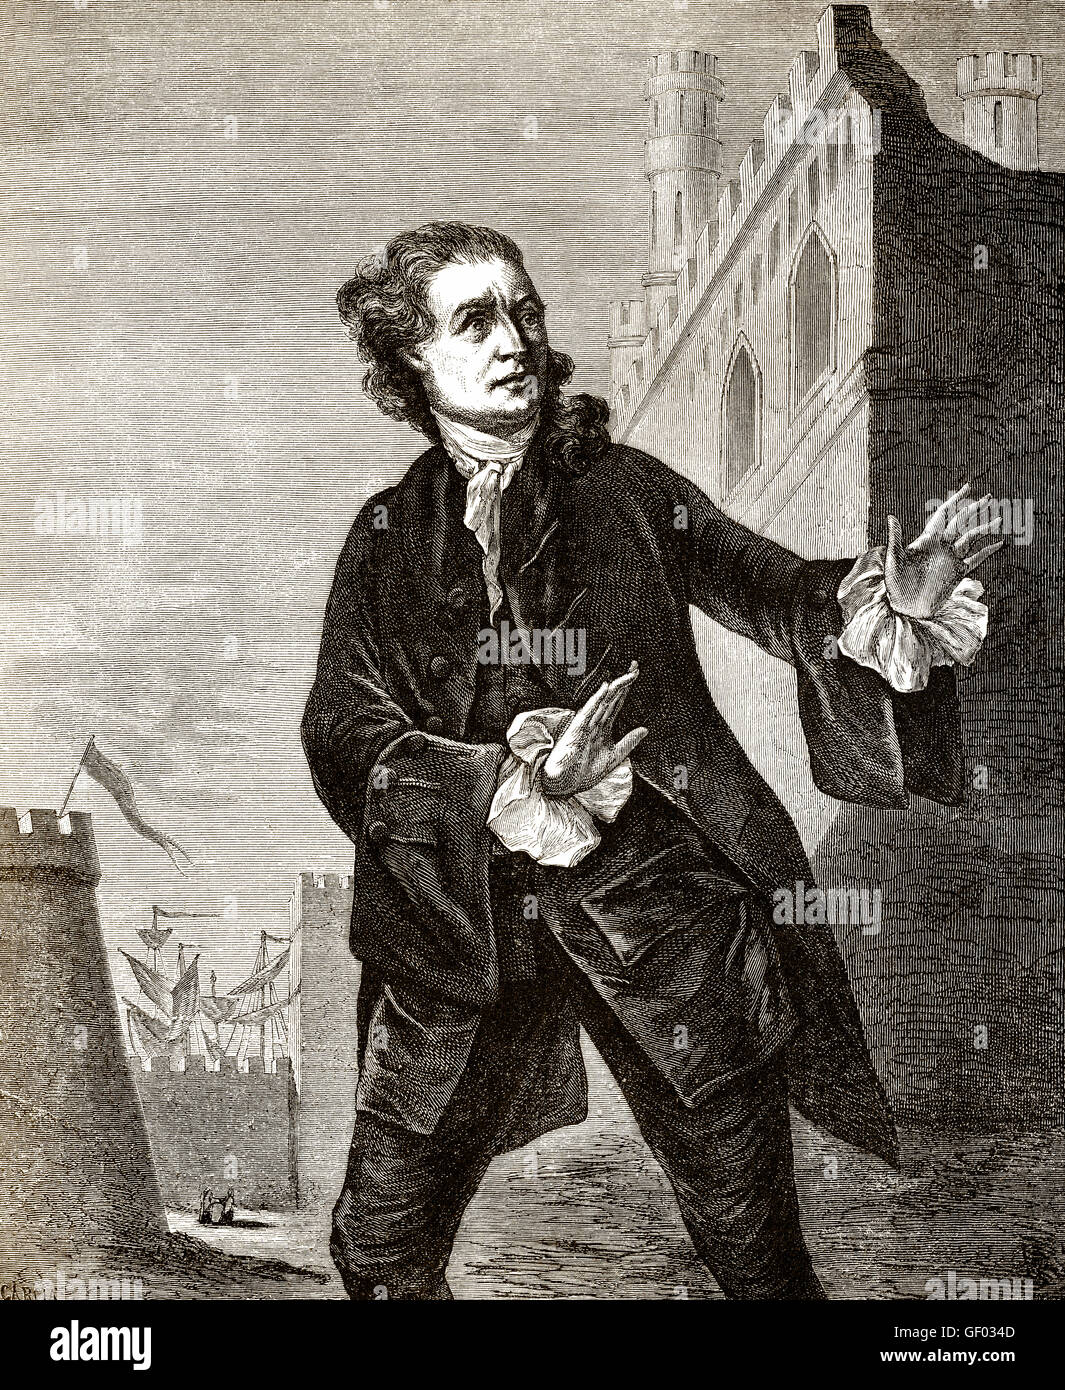 David Garrick, 1717-1779, an English actor, as Hamlet Stock Photo